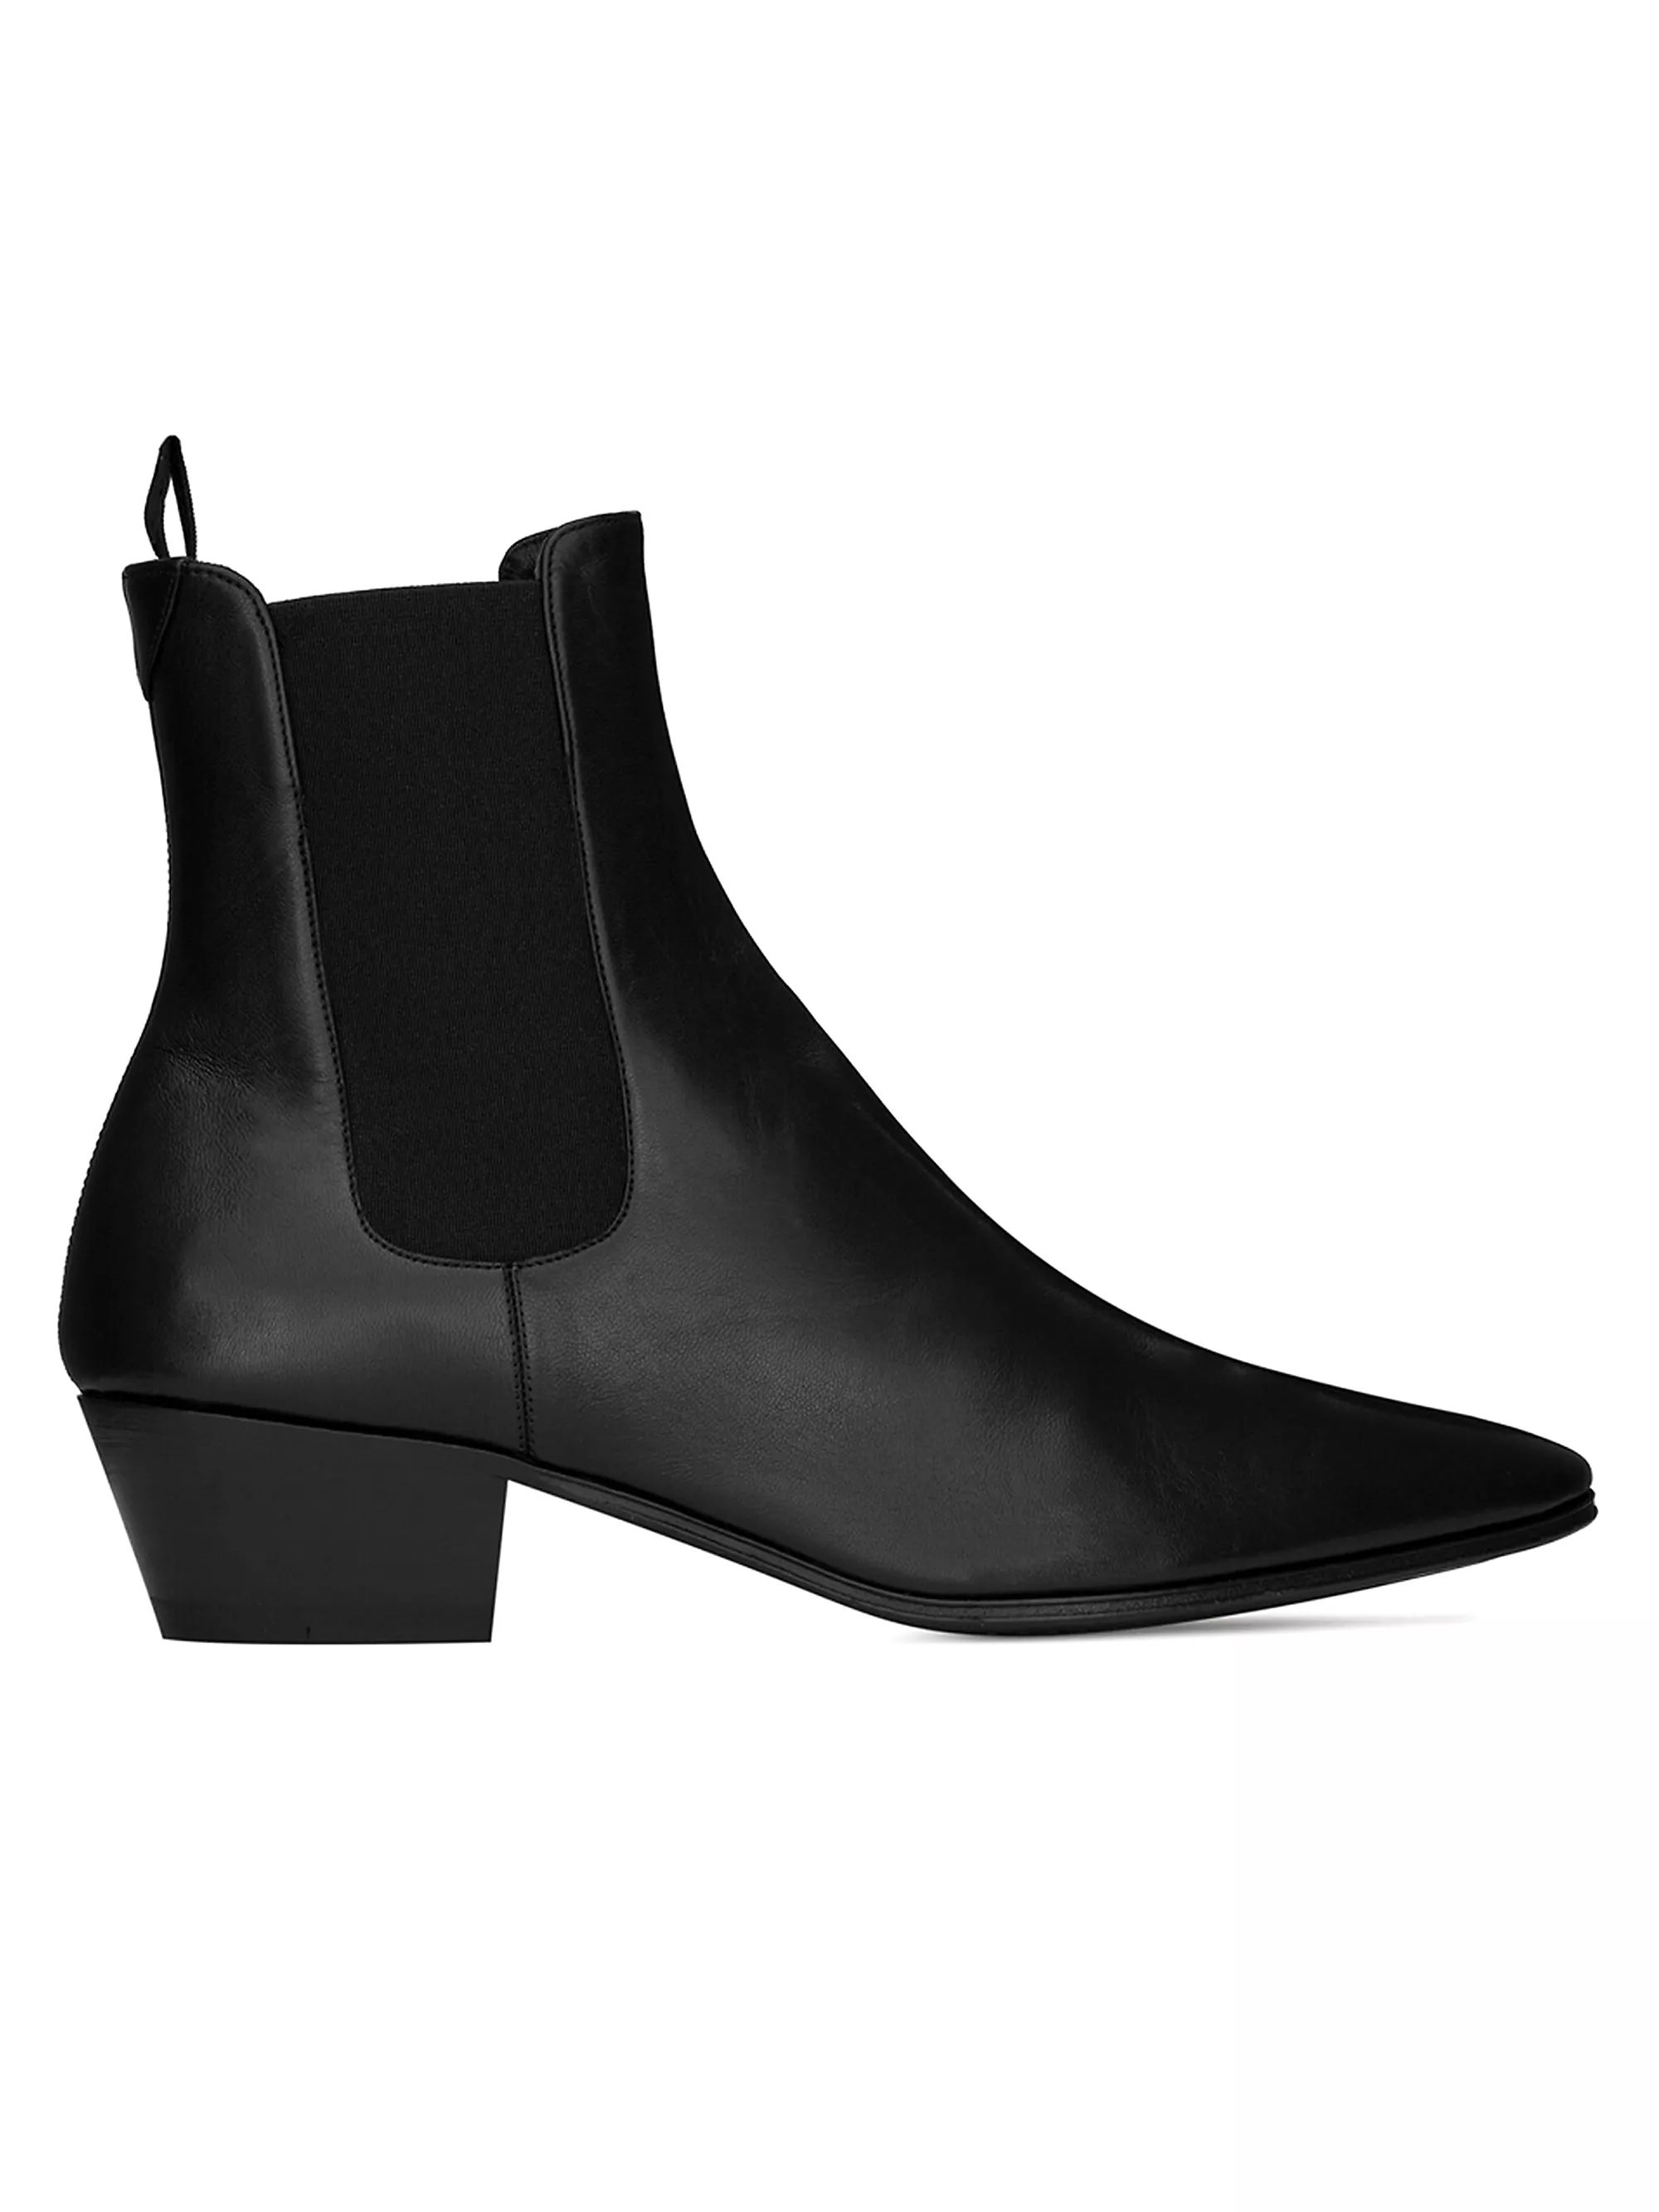 NeroAll BootiesSaint LaurentVassili Chelsea Booties in Smooth Leather$1,215
            
        ... | Saks Fifth Avenue